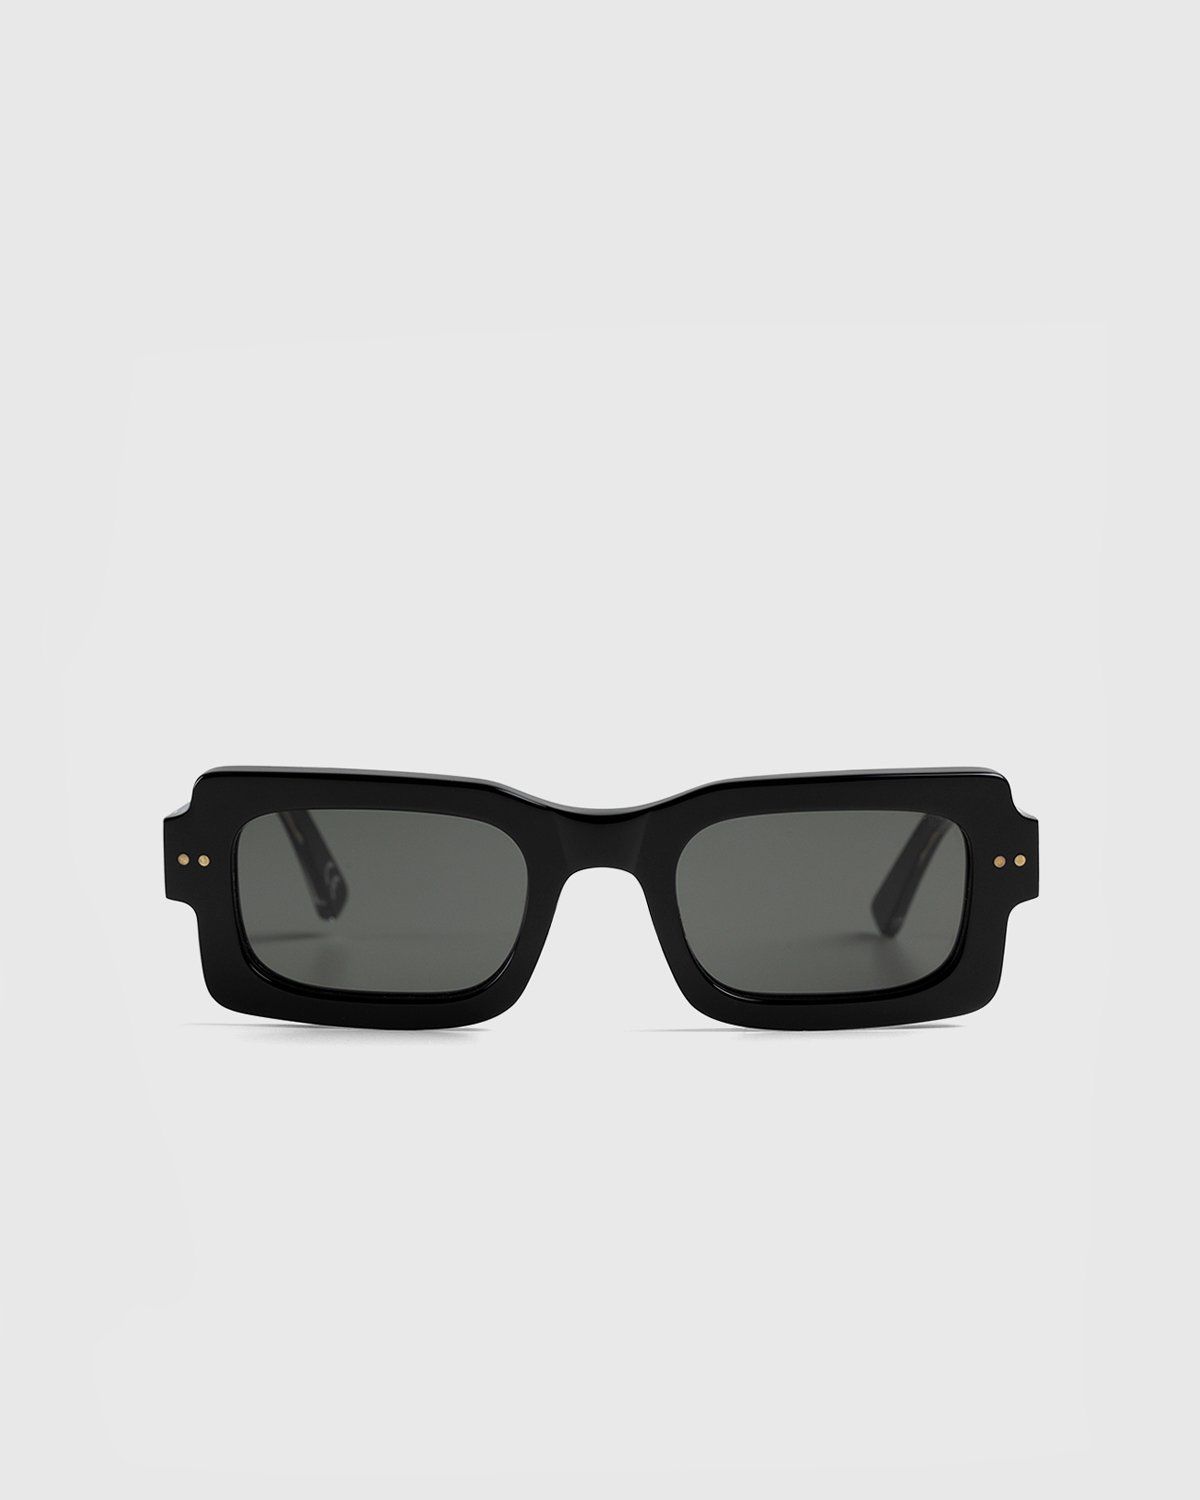 Marni – Lake Vostok Sunglasses Black - Eyewear - Black - Image 1